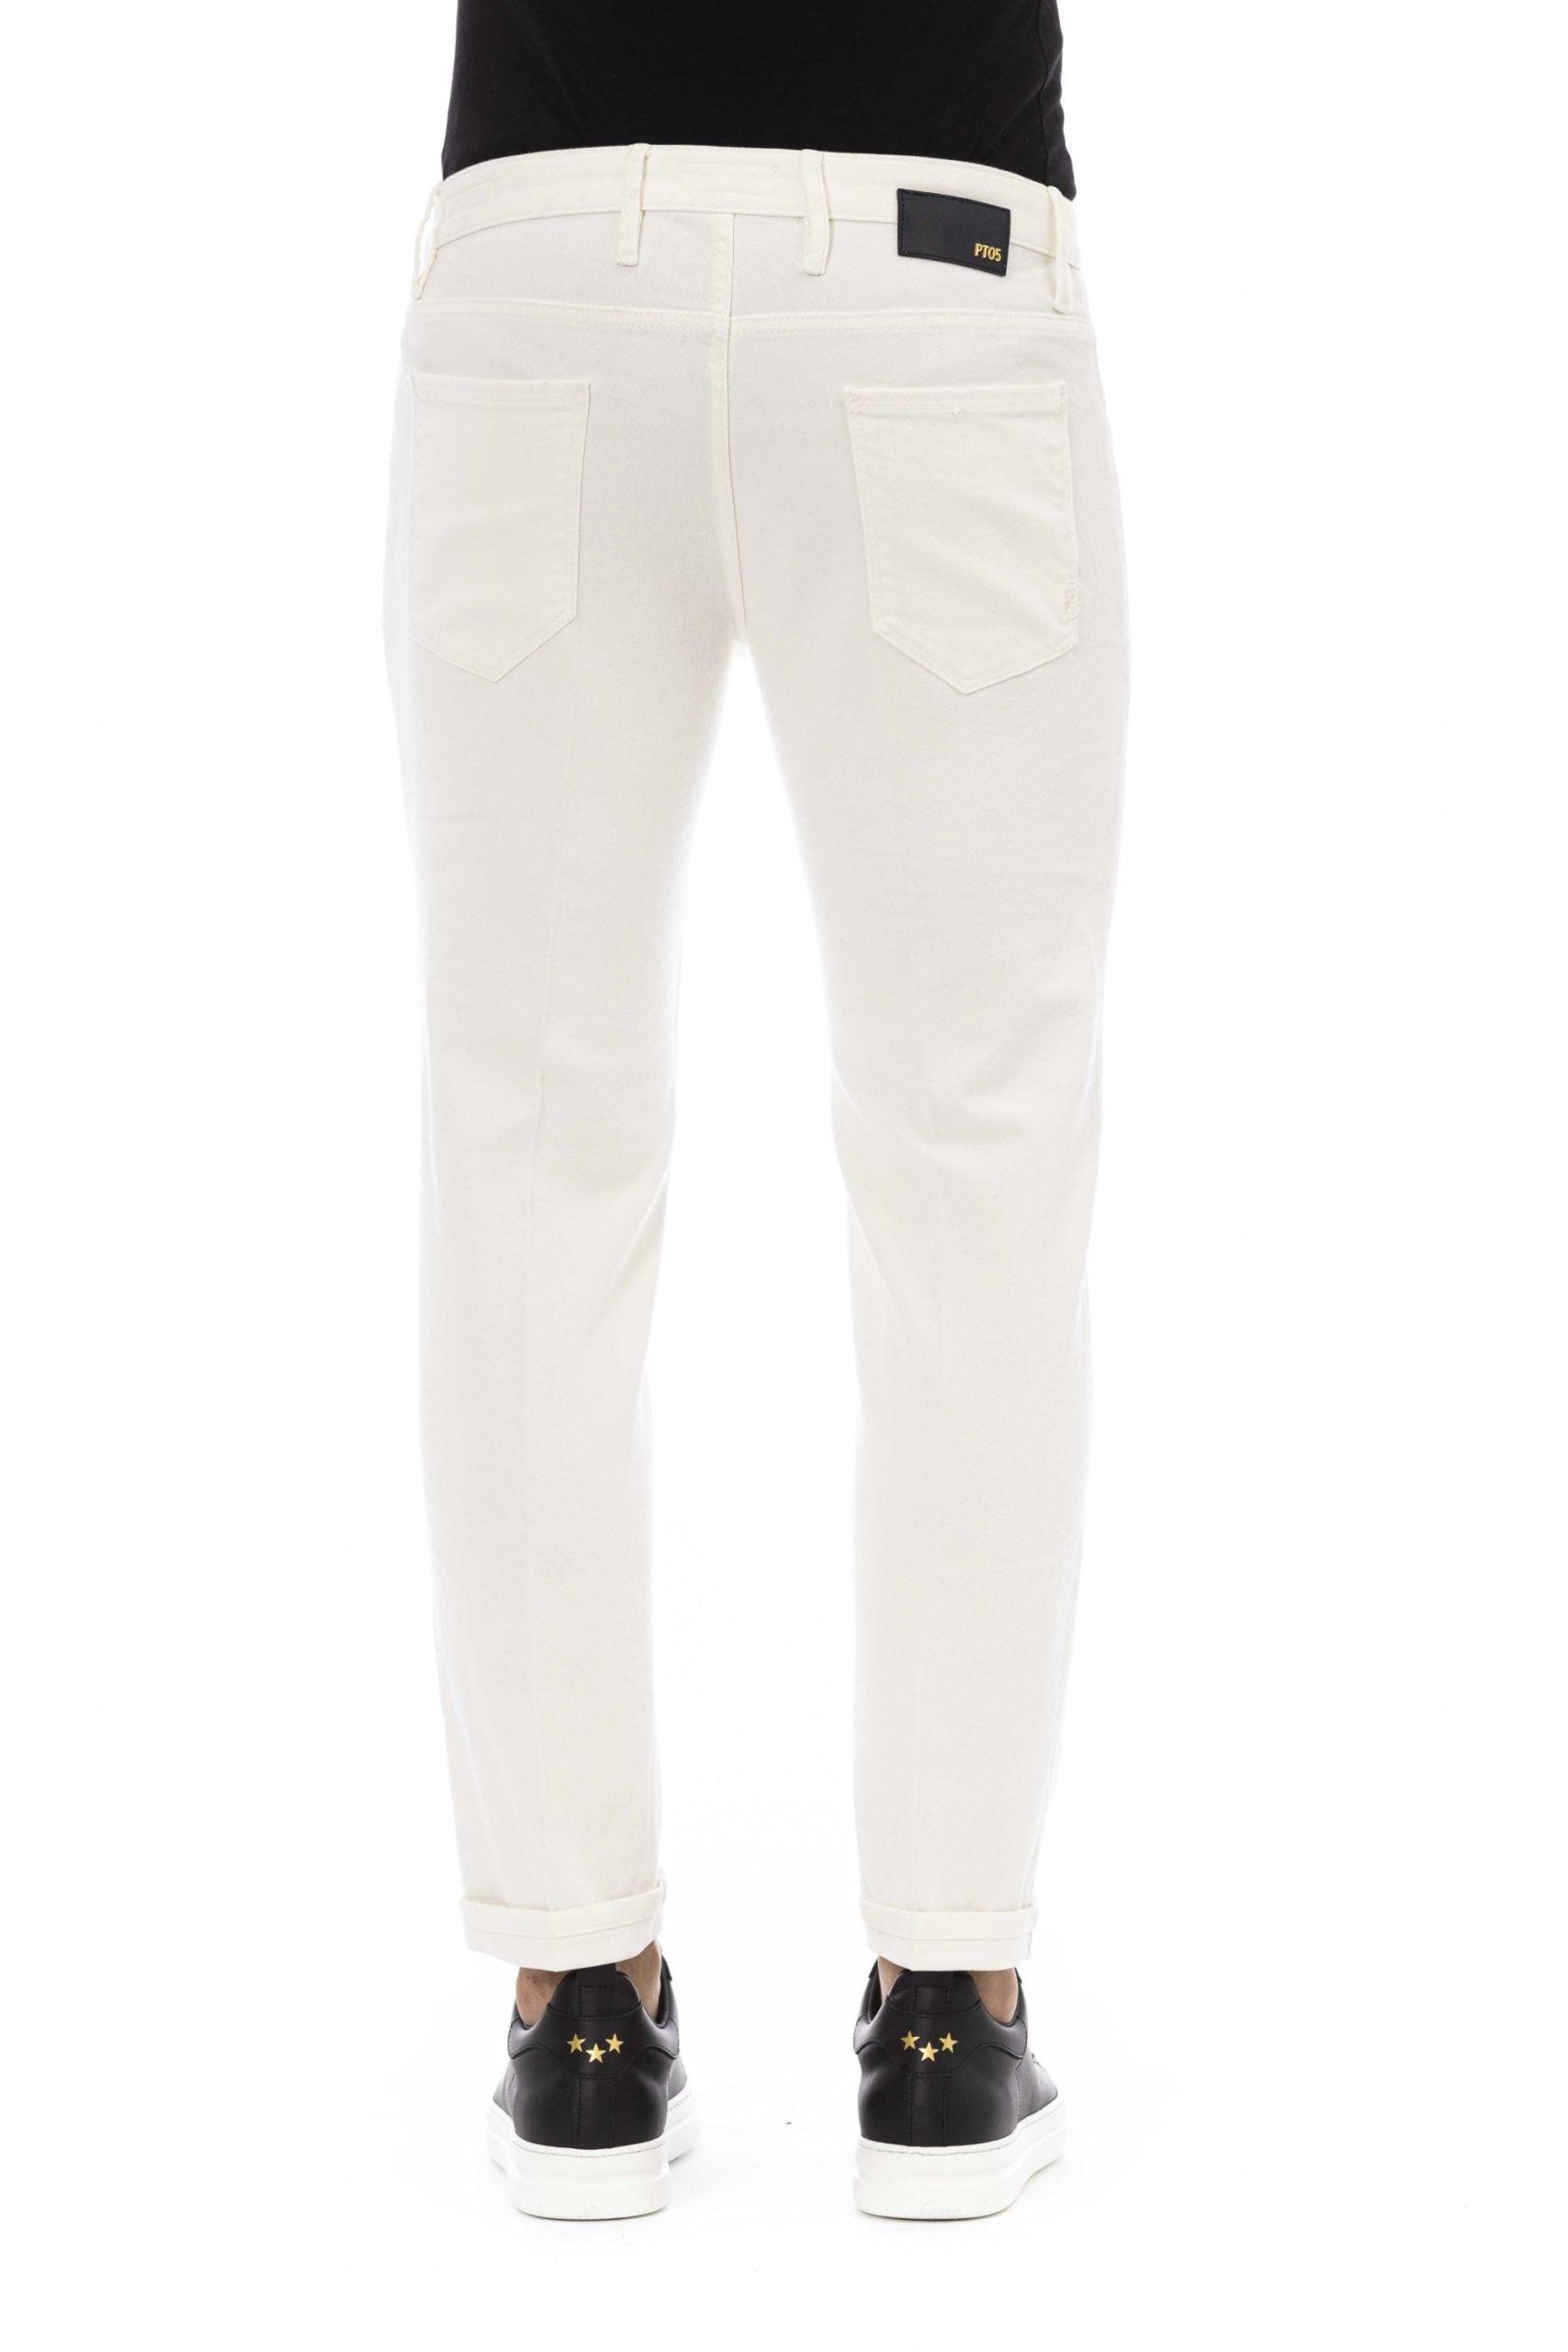 PT Torino Cotton Jeans & Pant in White for Men | Lyst